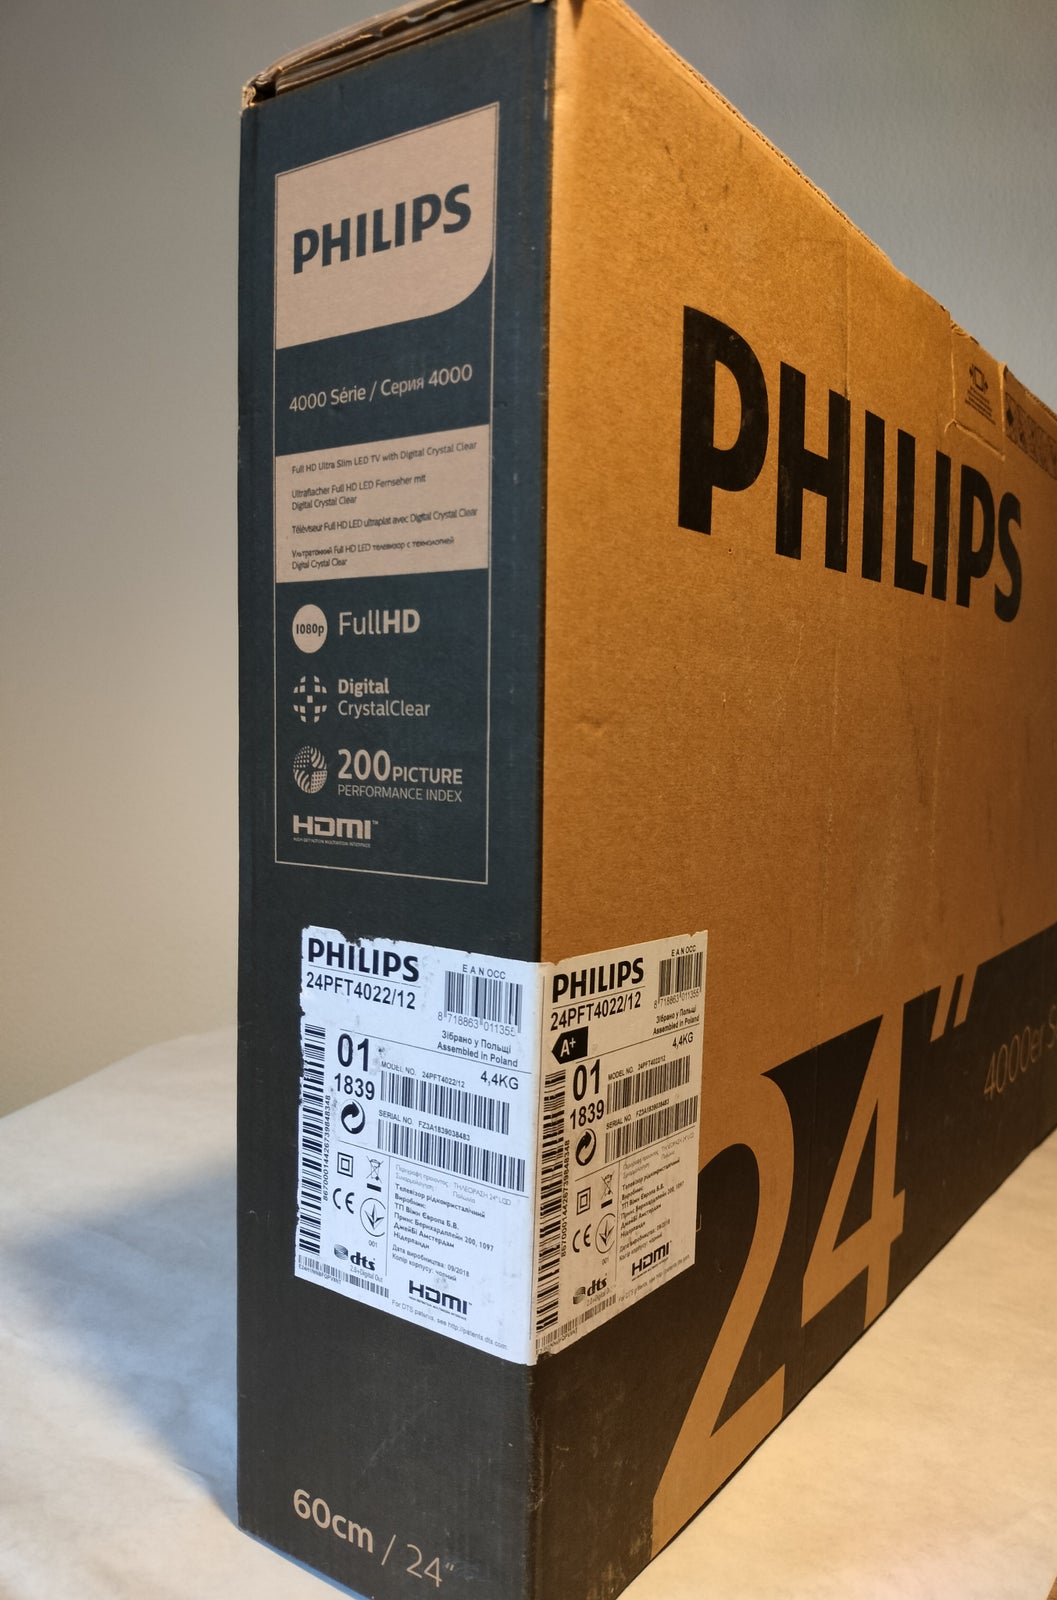 LED, Philips, 4000 series